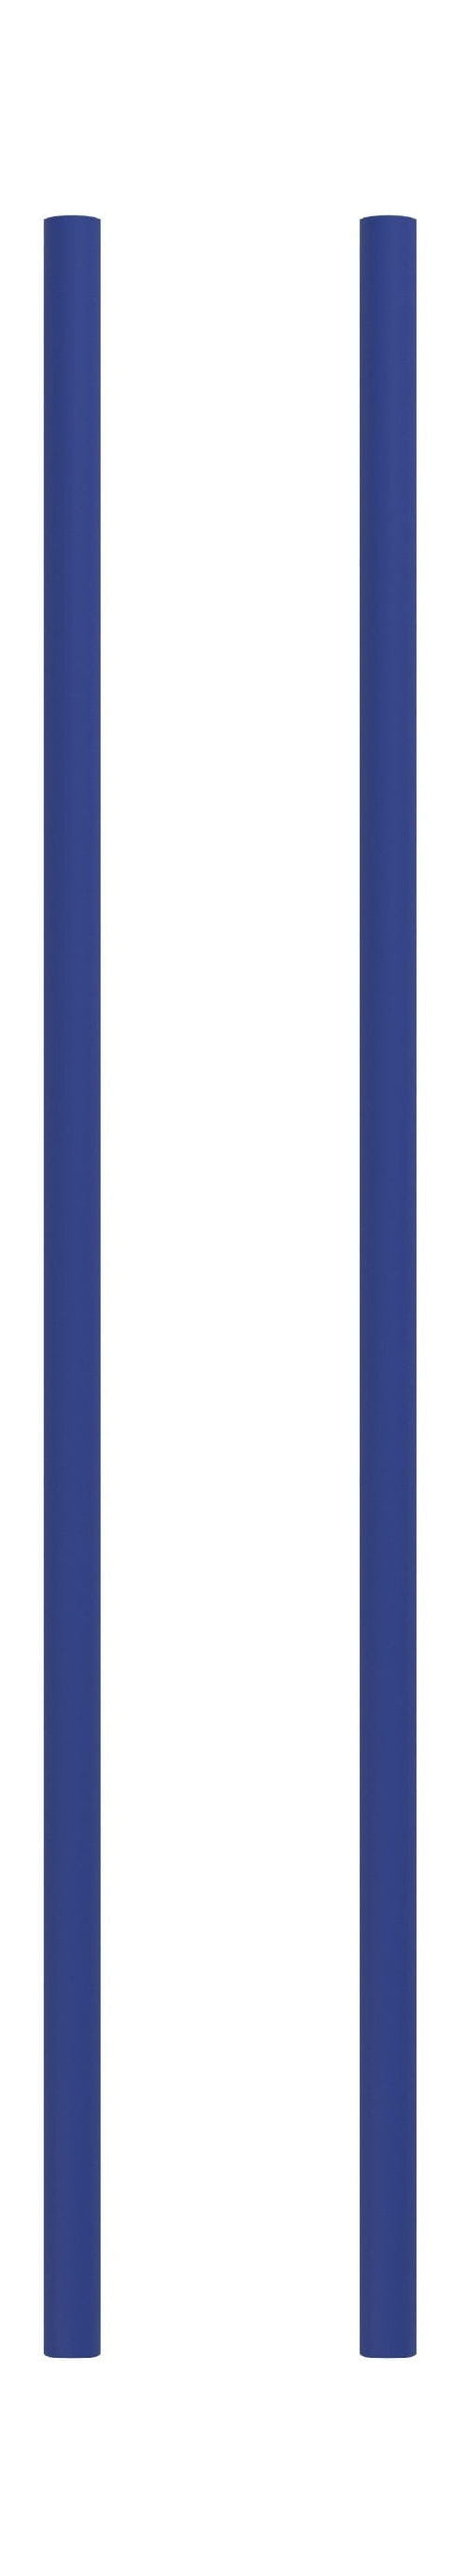 Moebe Hyllsystem/vägghyllande ben 65 cm, djupblå